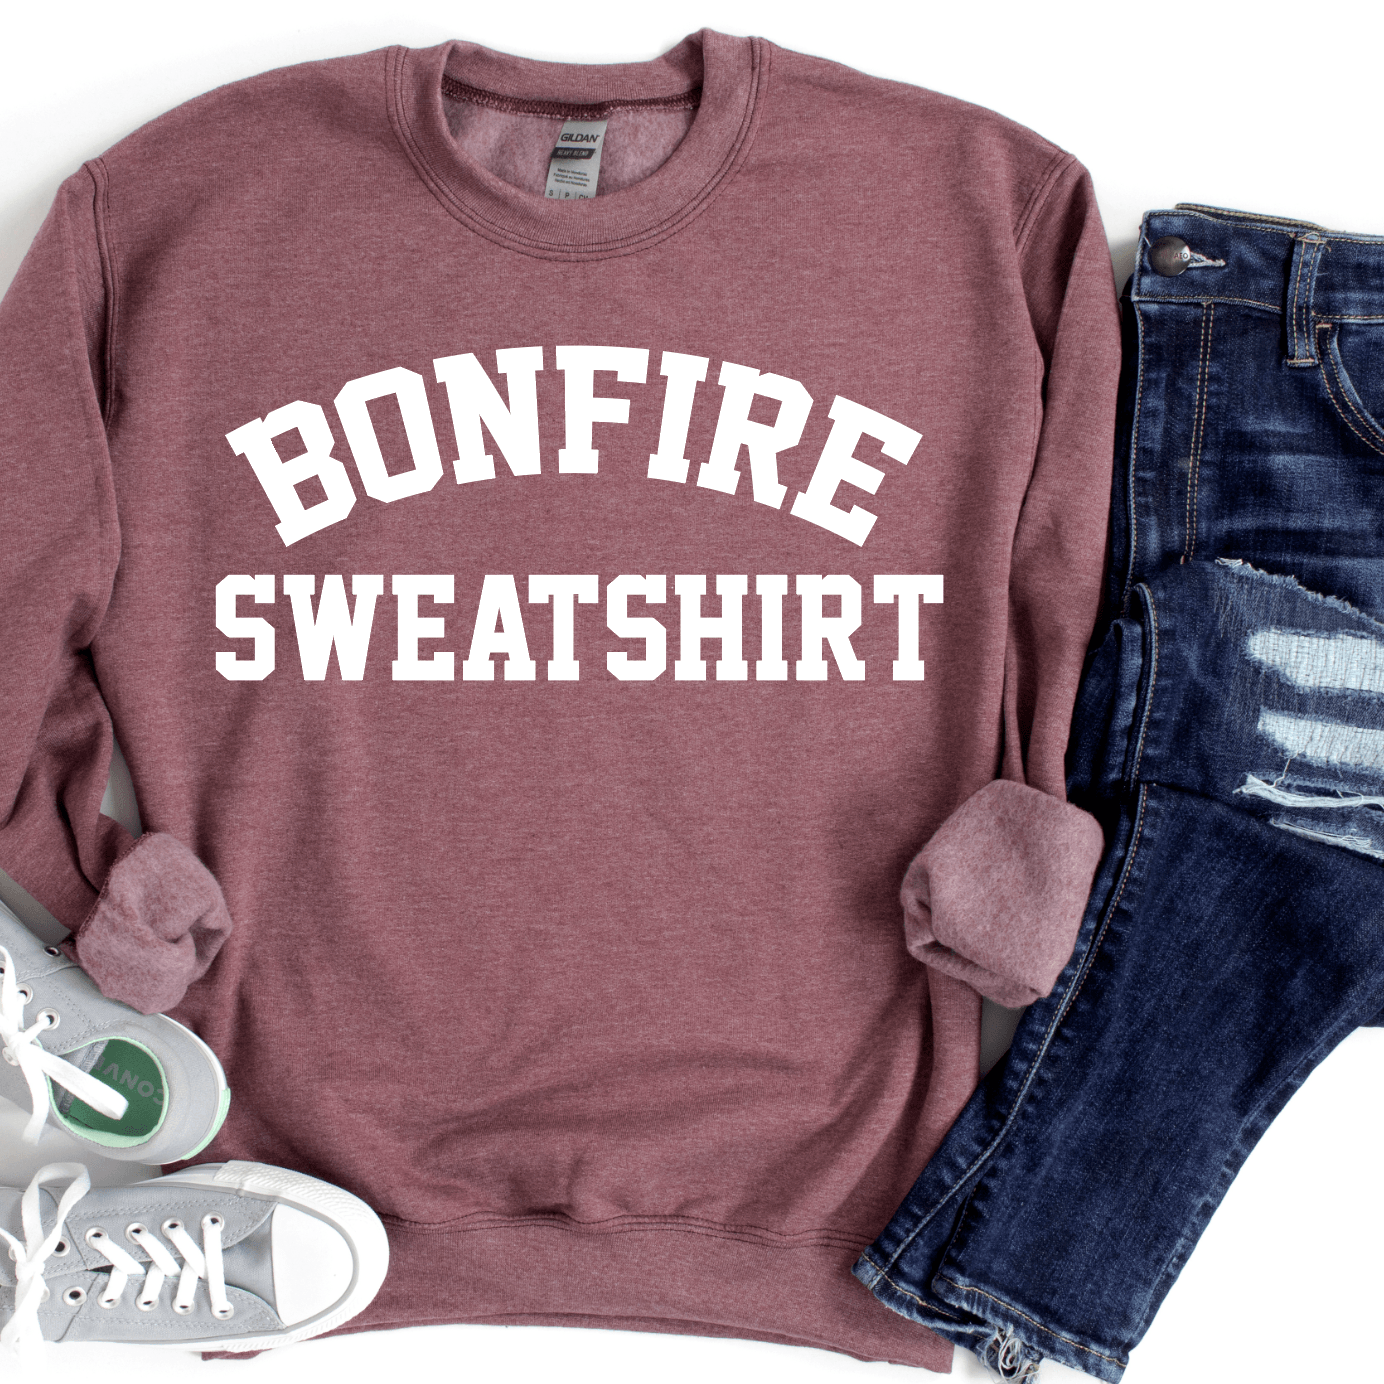 Bonfire Sweatshirt - Signastyle Boutique